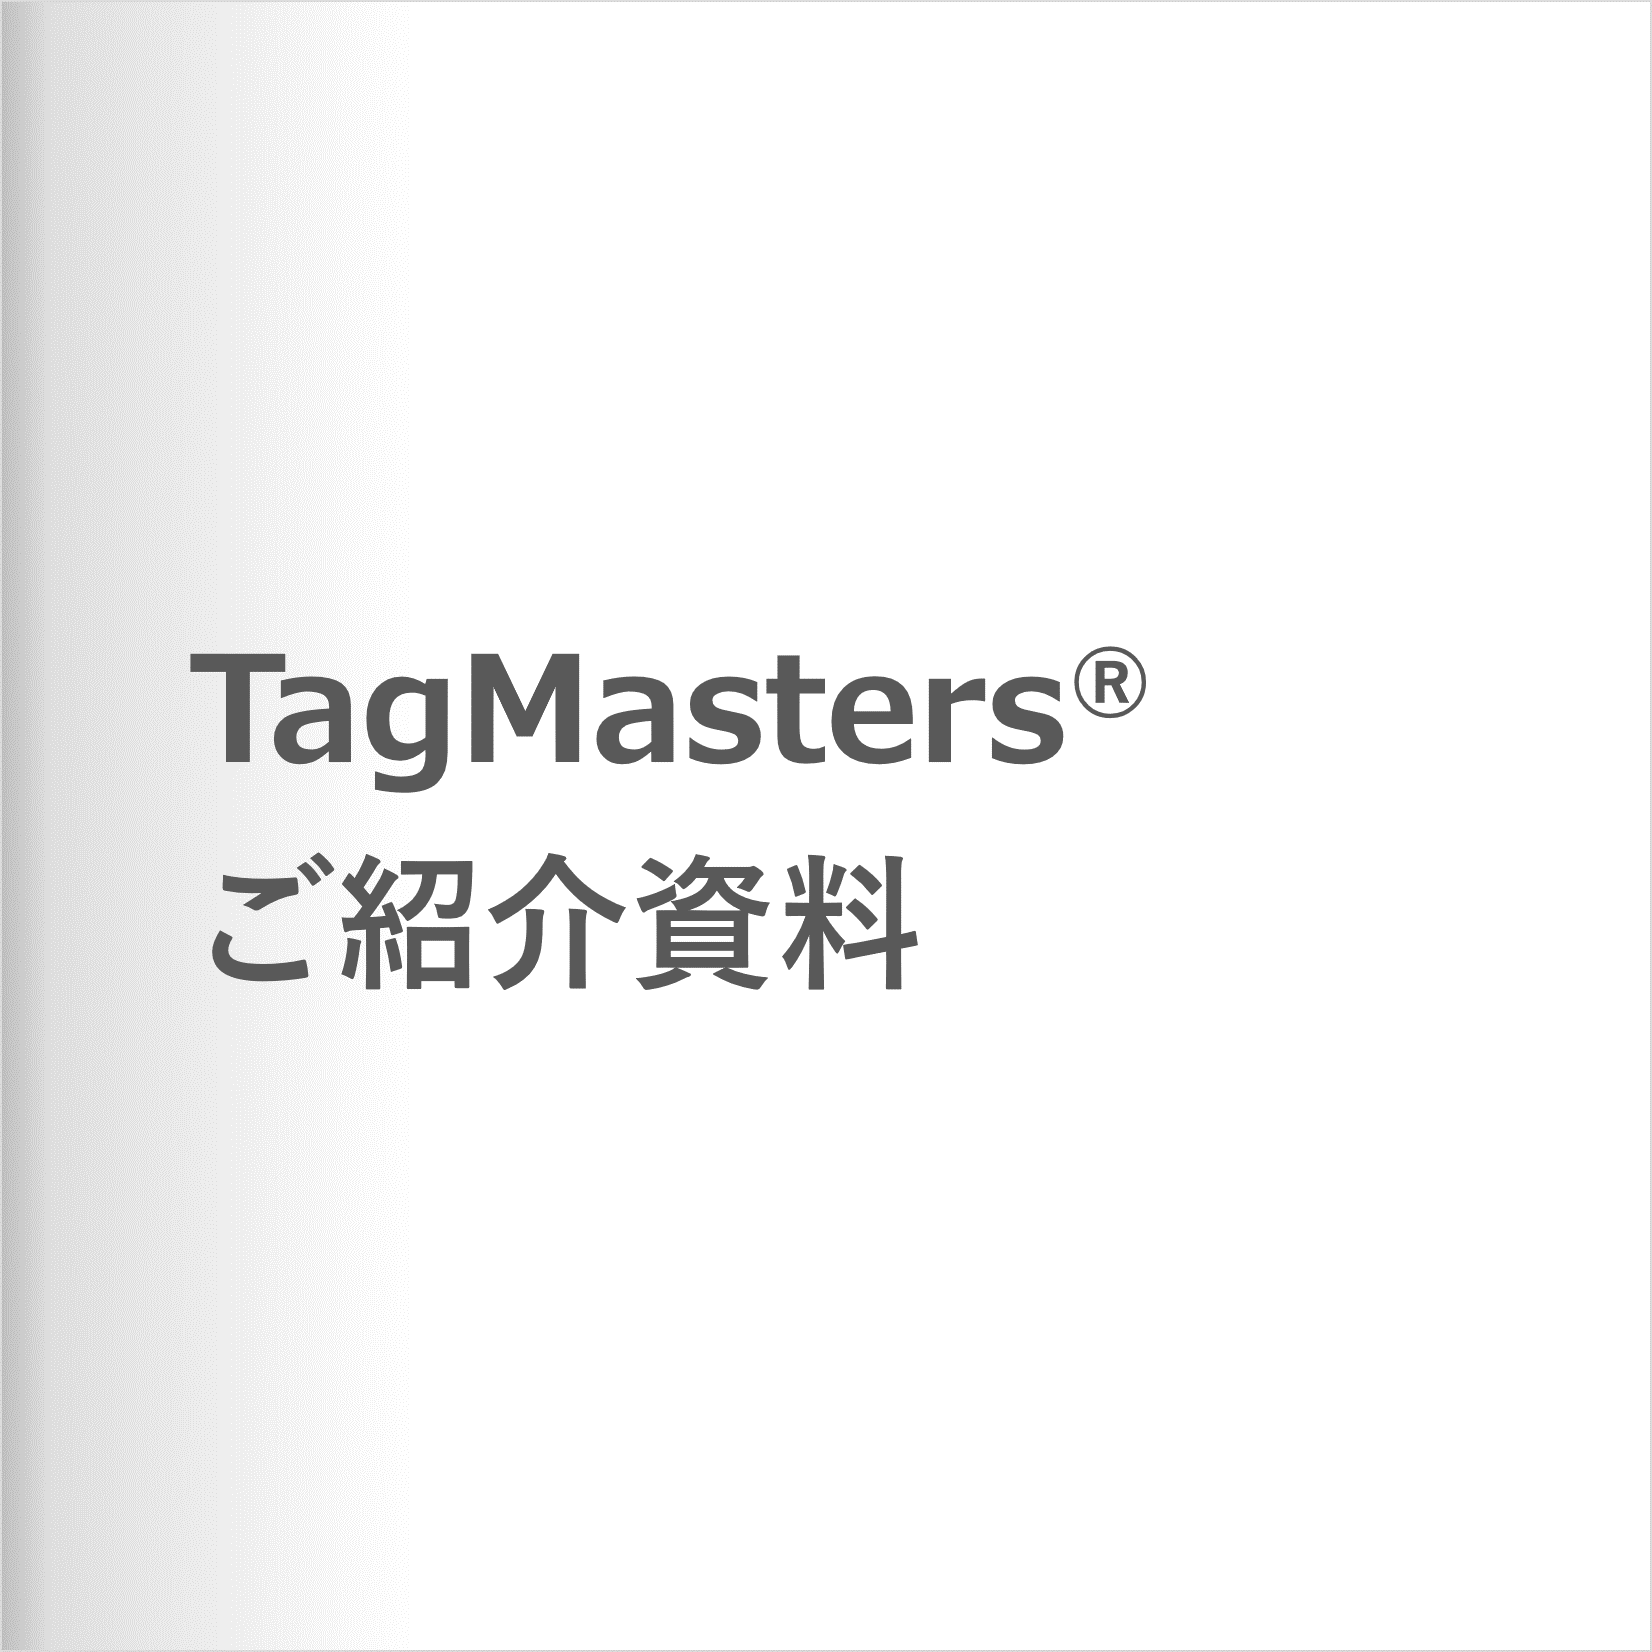 TagMasters ご紹介資料